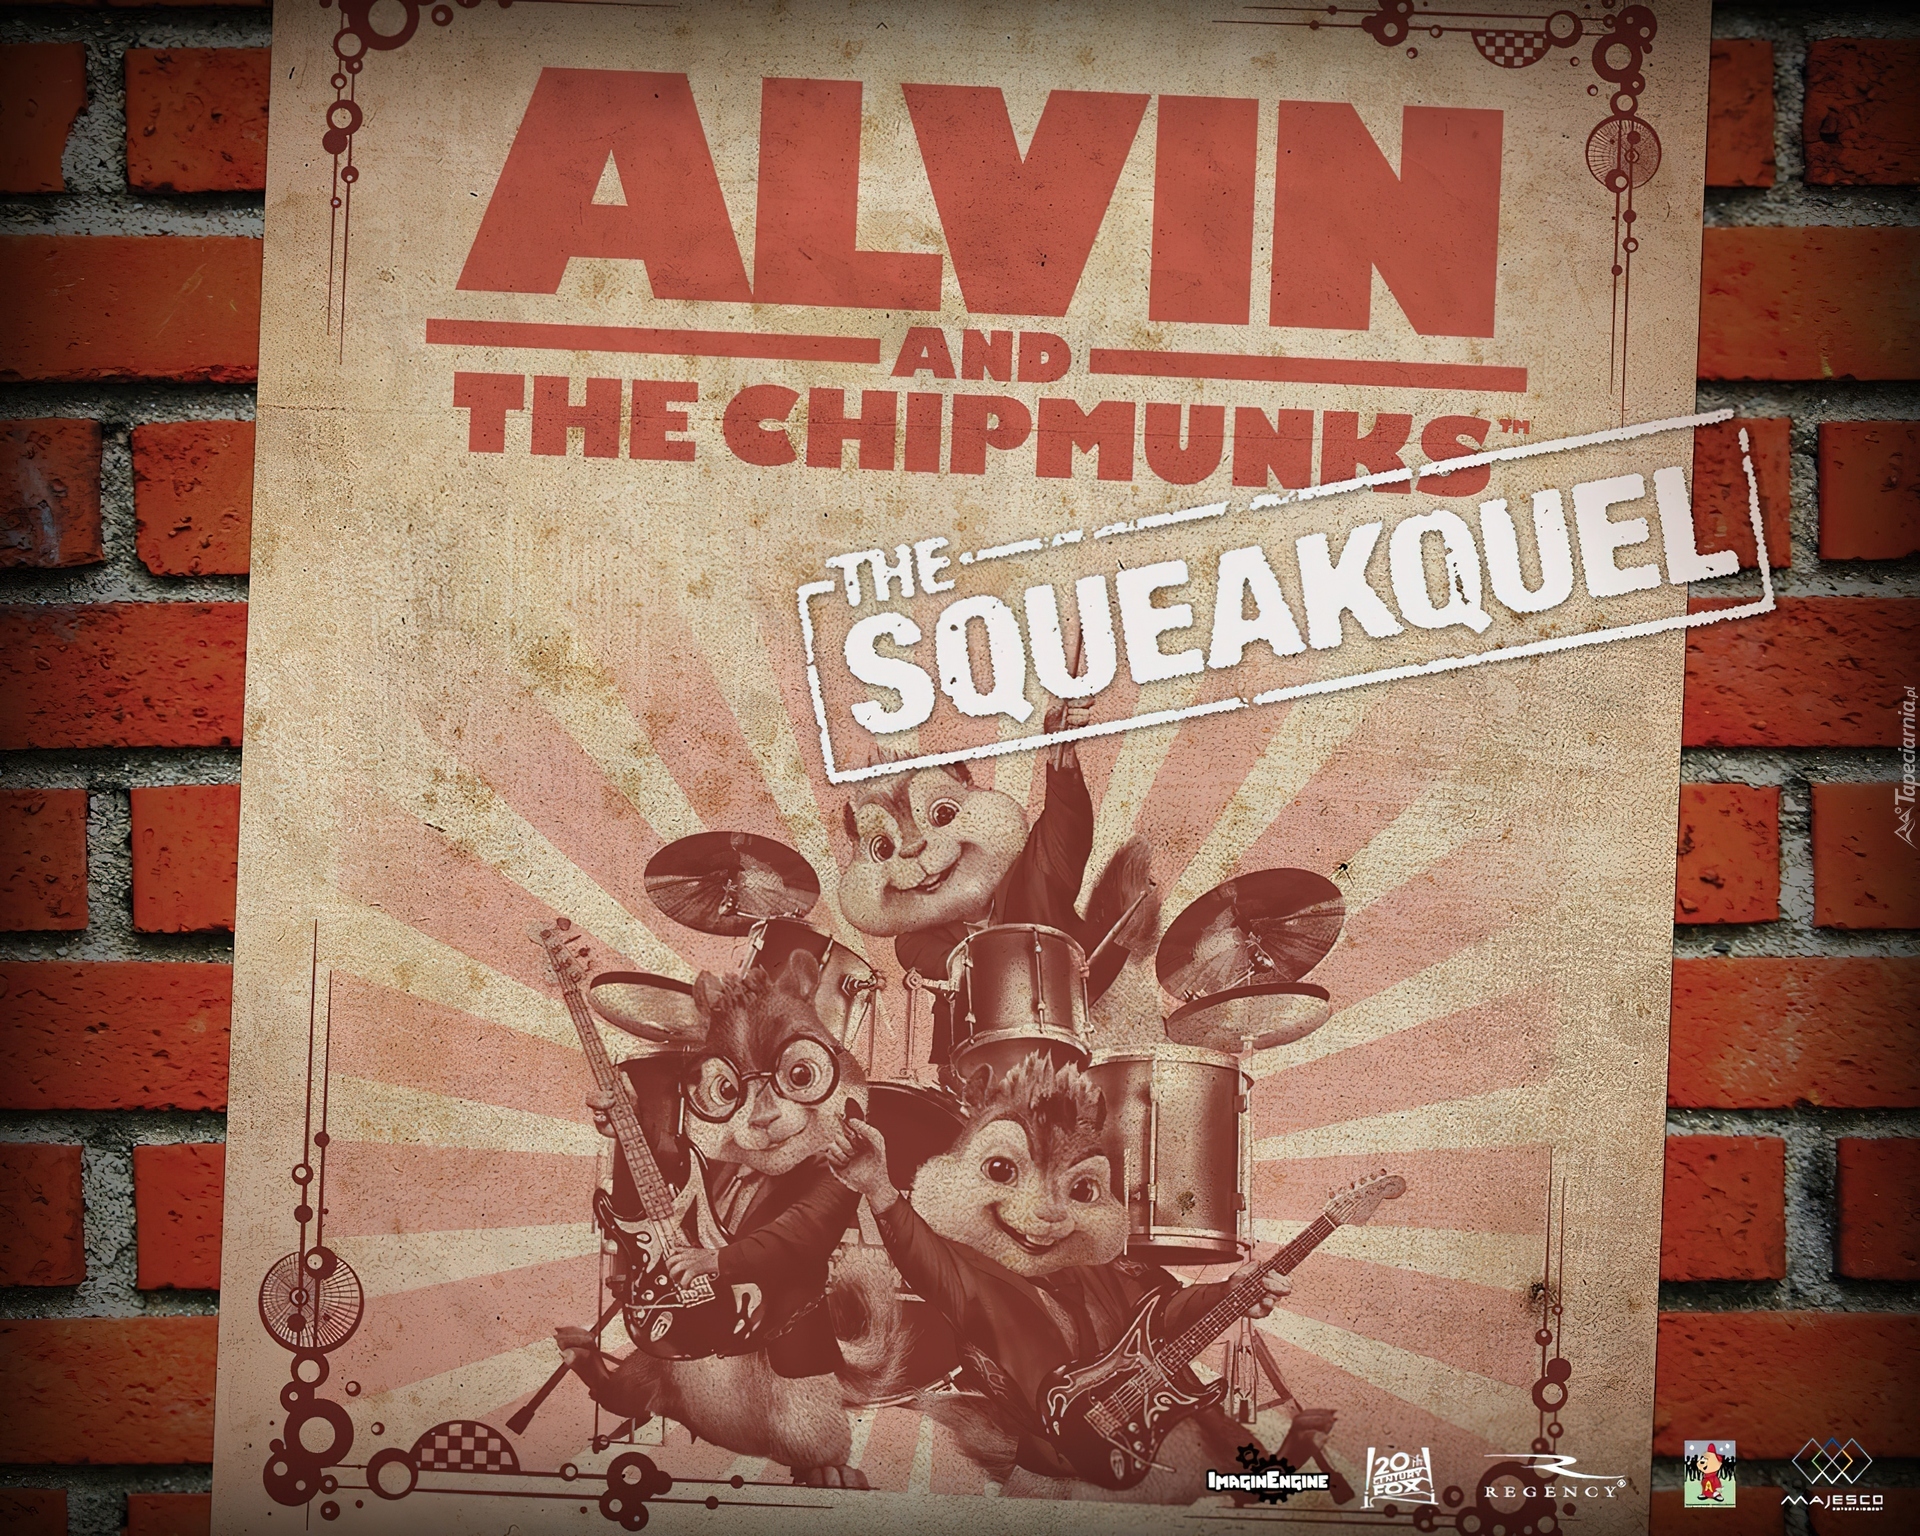 Alvin i wiewiórki, Alvin and the Chipmunks, Plakat